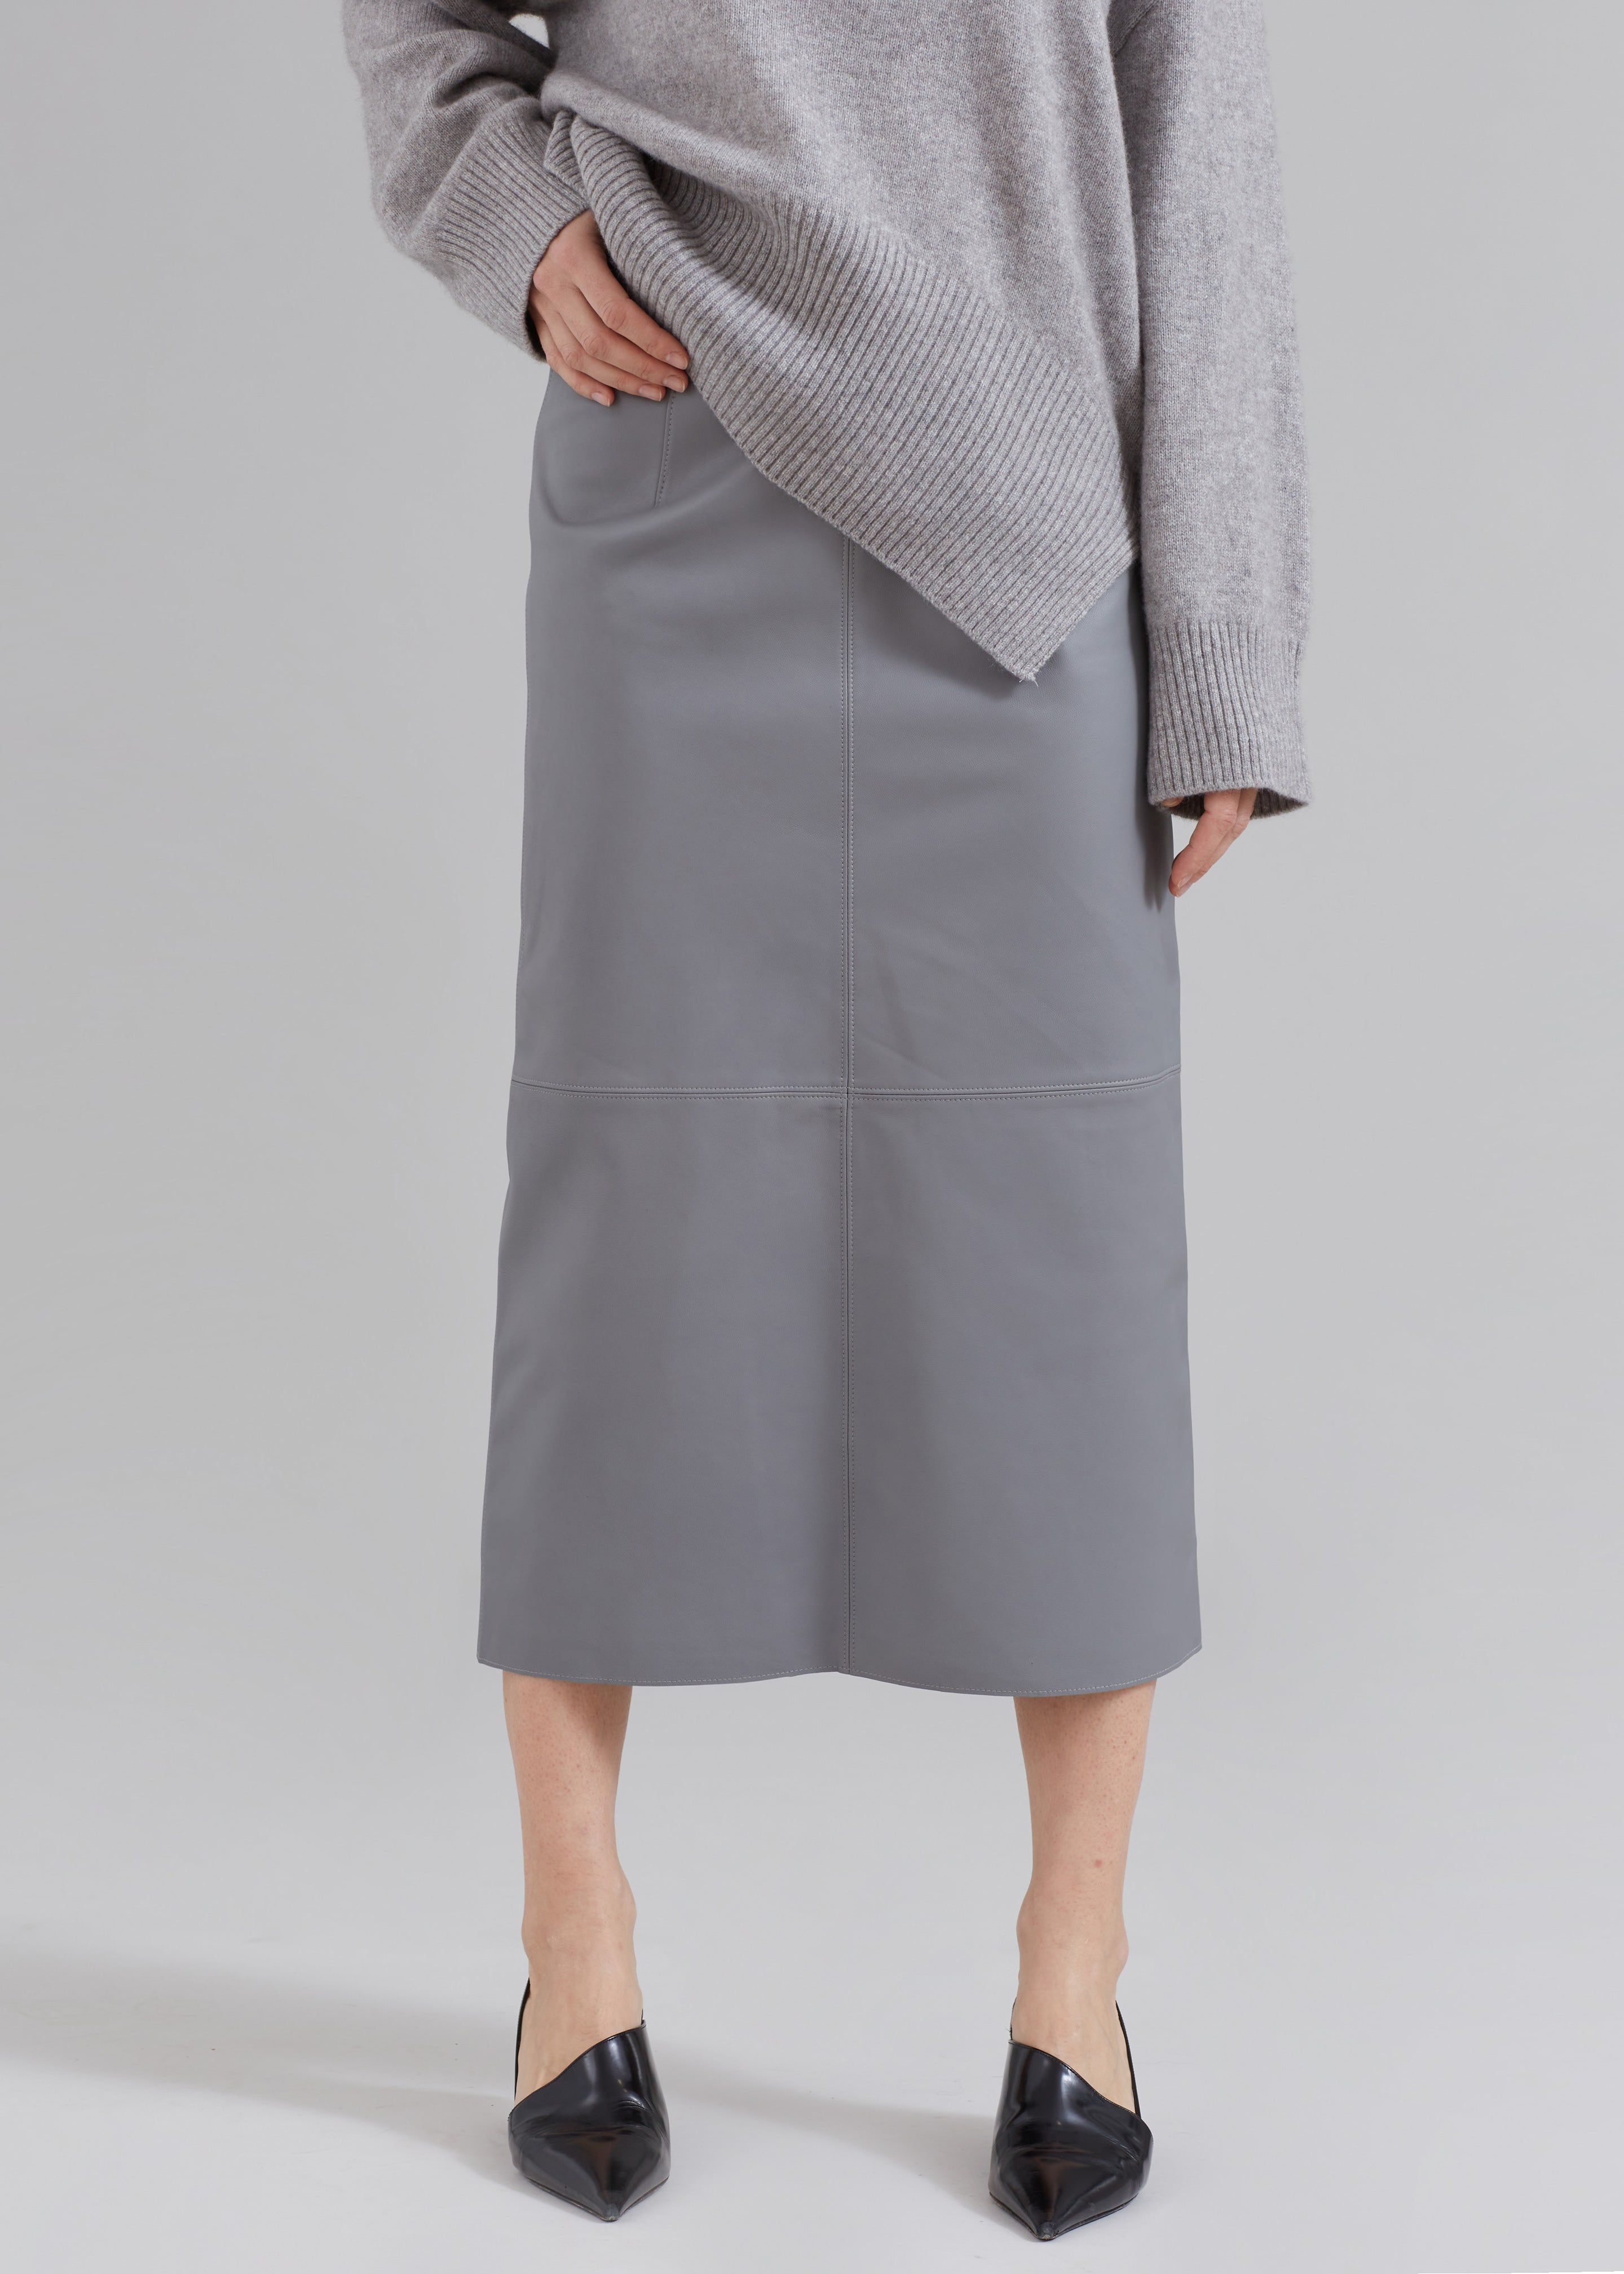 Heather Leather Pencil Skirt - Grey - 6